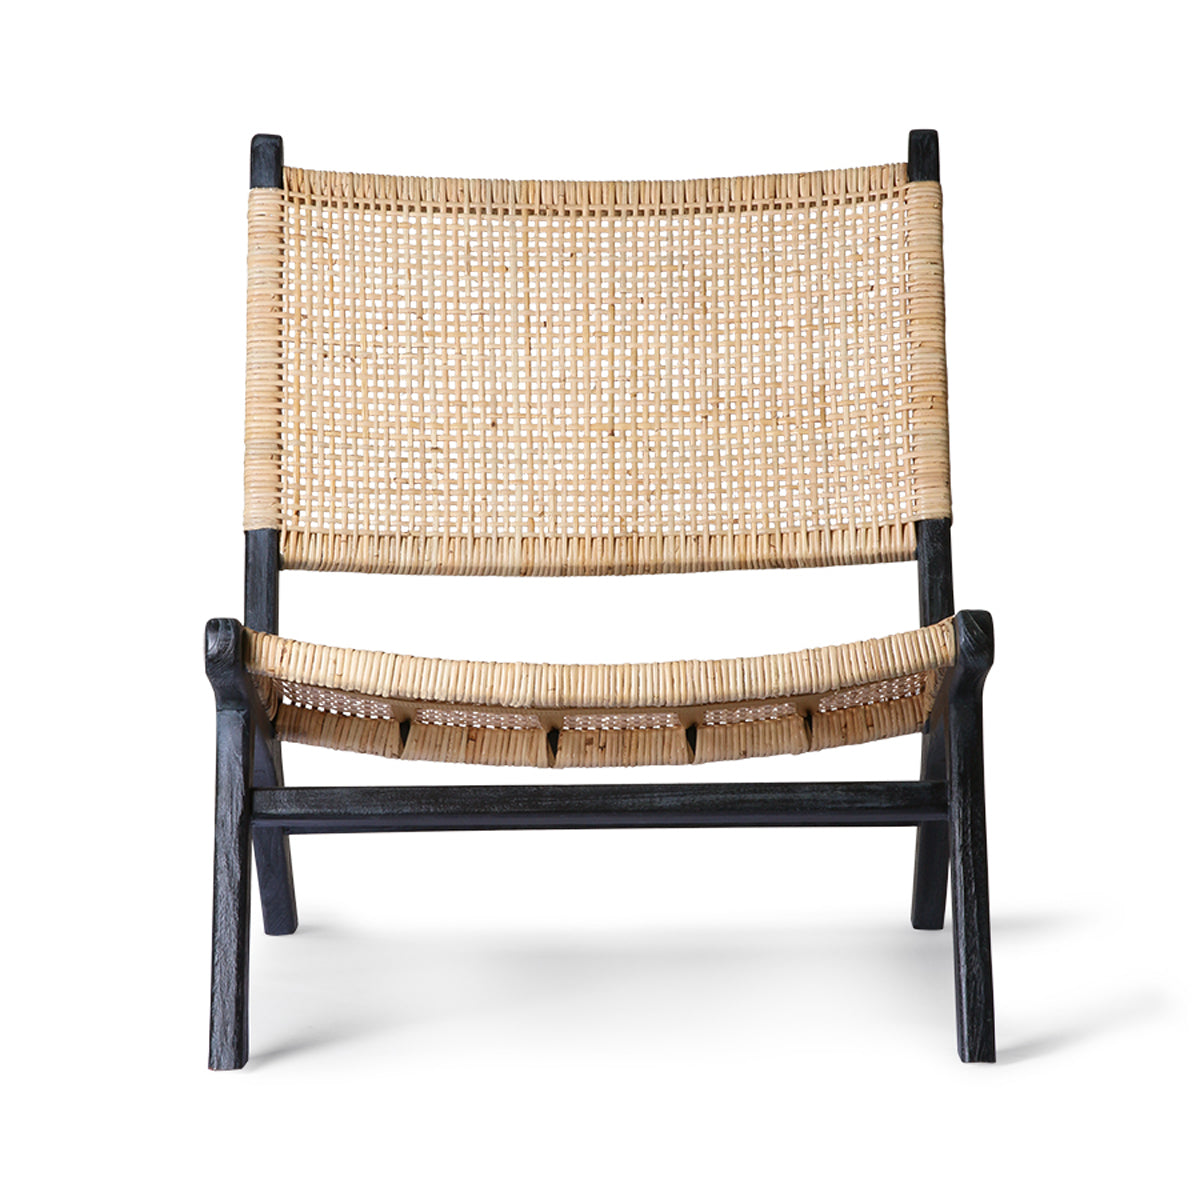 Webbing Lounge Chair Black/Natural